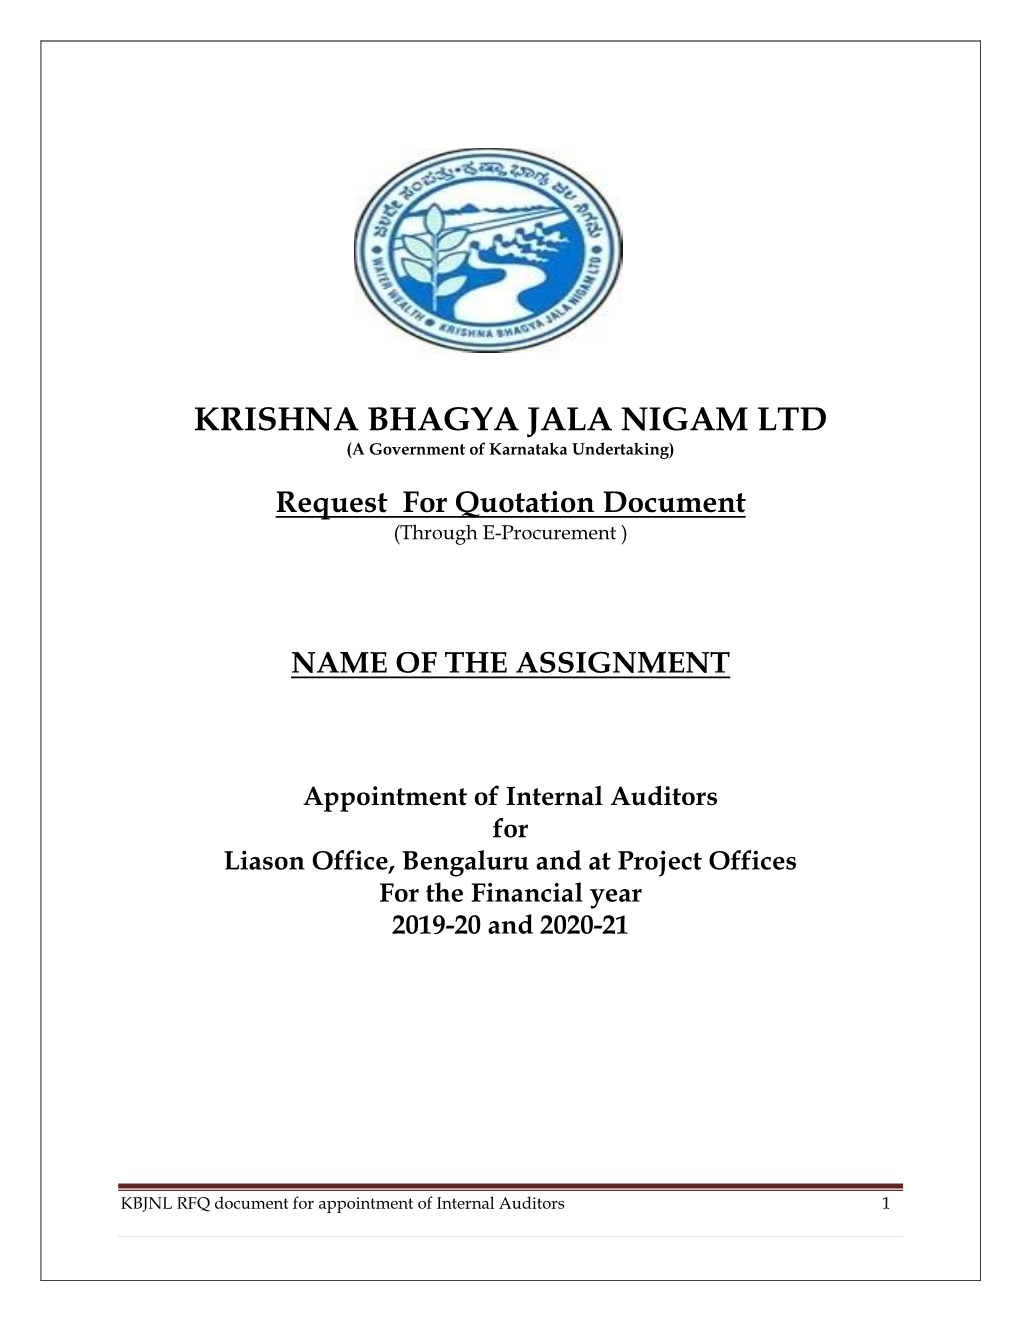 KRISHNA BHAGYA JALA NIGAM LTD (A Government of Karnataka Undertaking)